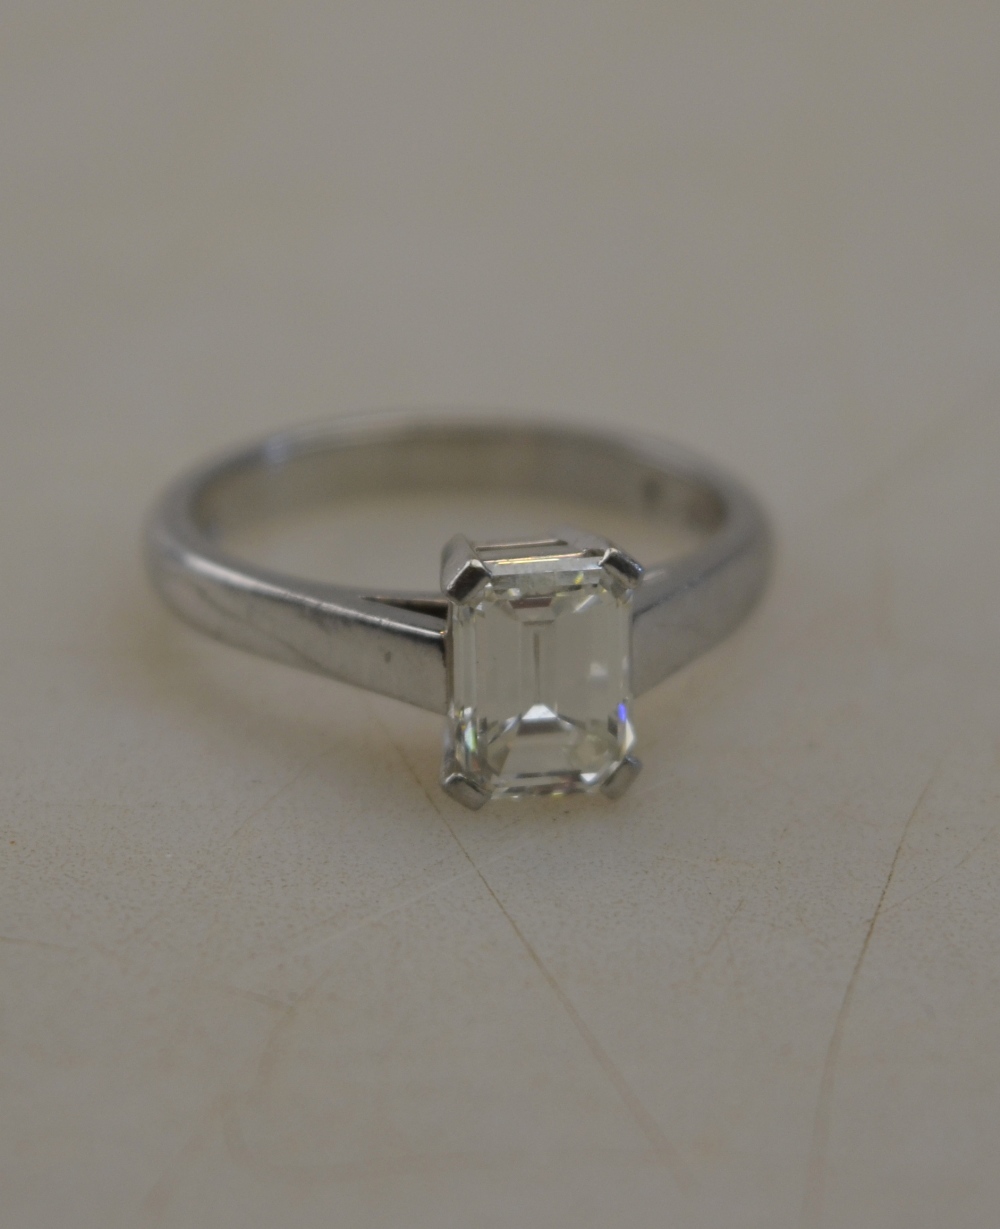 A single stone emerald cut diamond ring